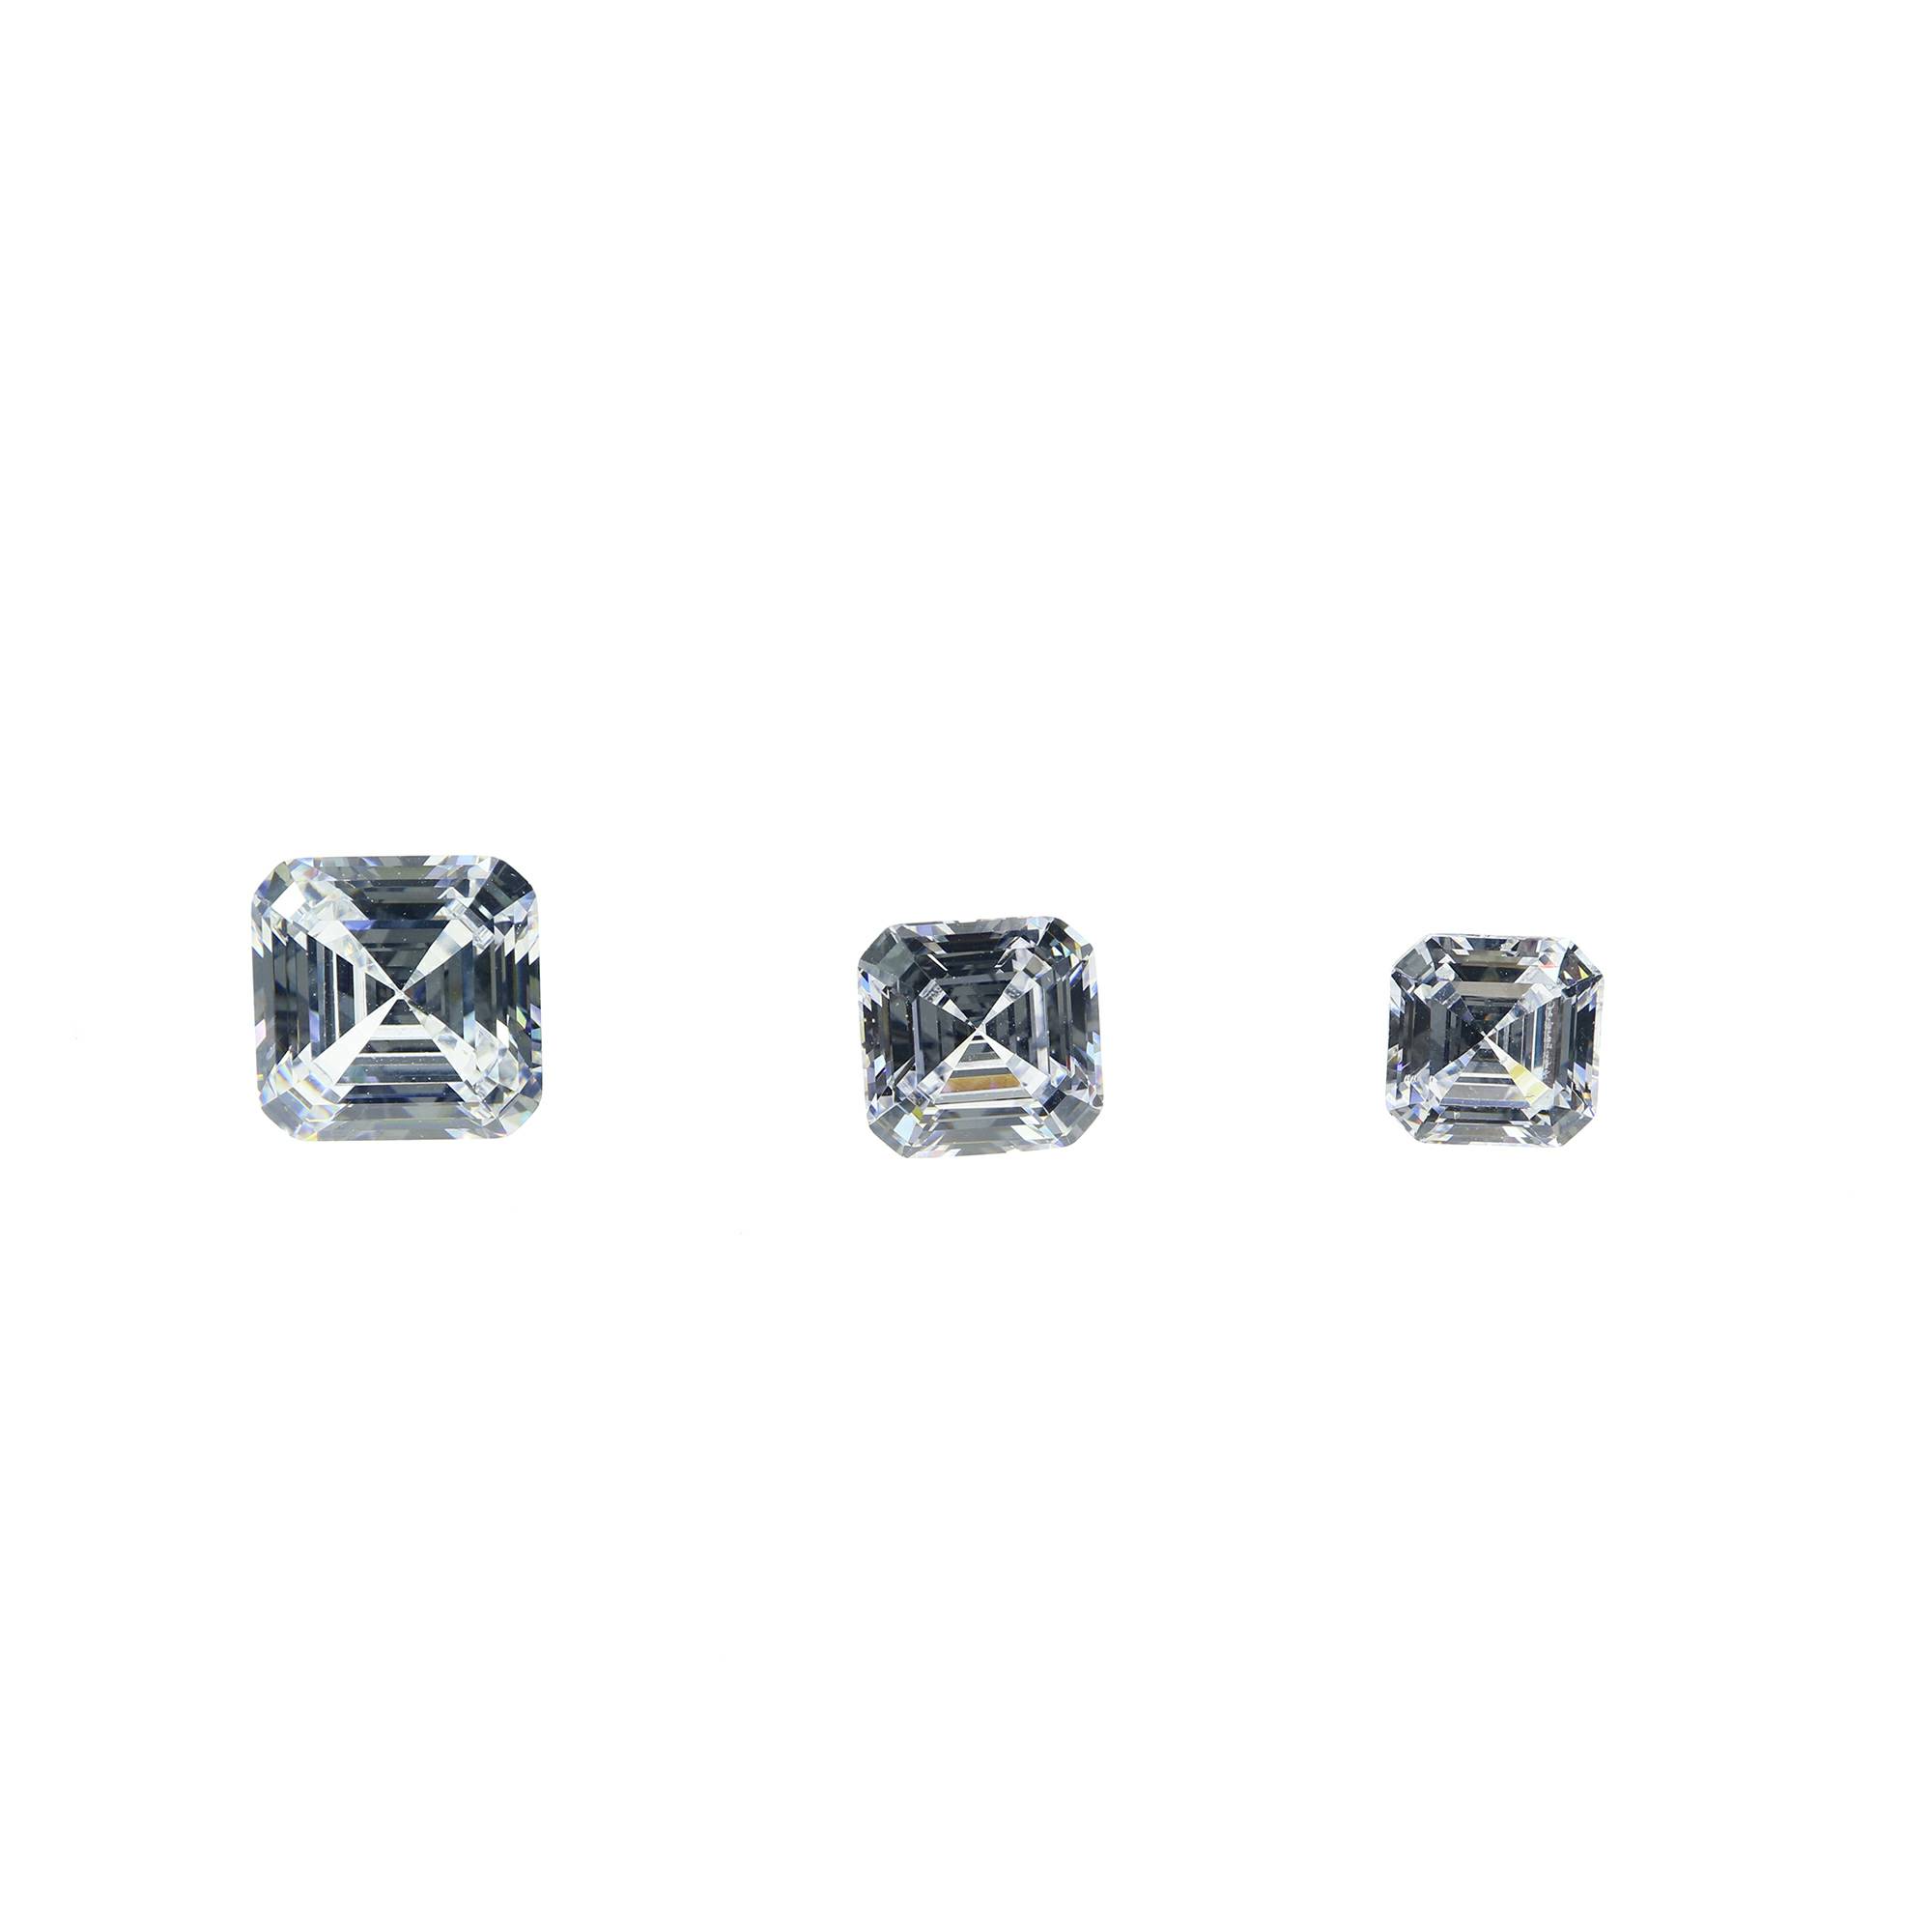 1Pcs Multiple Size Square Asscher Cut Moissanite Stone Faceted Imitated Diamond Loose Gemstone for DIY Engagement Ring D Color VVS1 Excellent Cut 4140017 - Click Image to Close